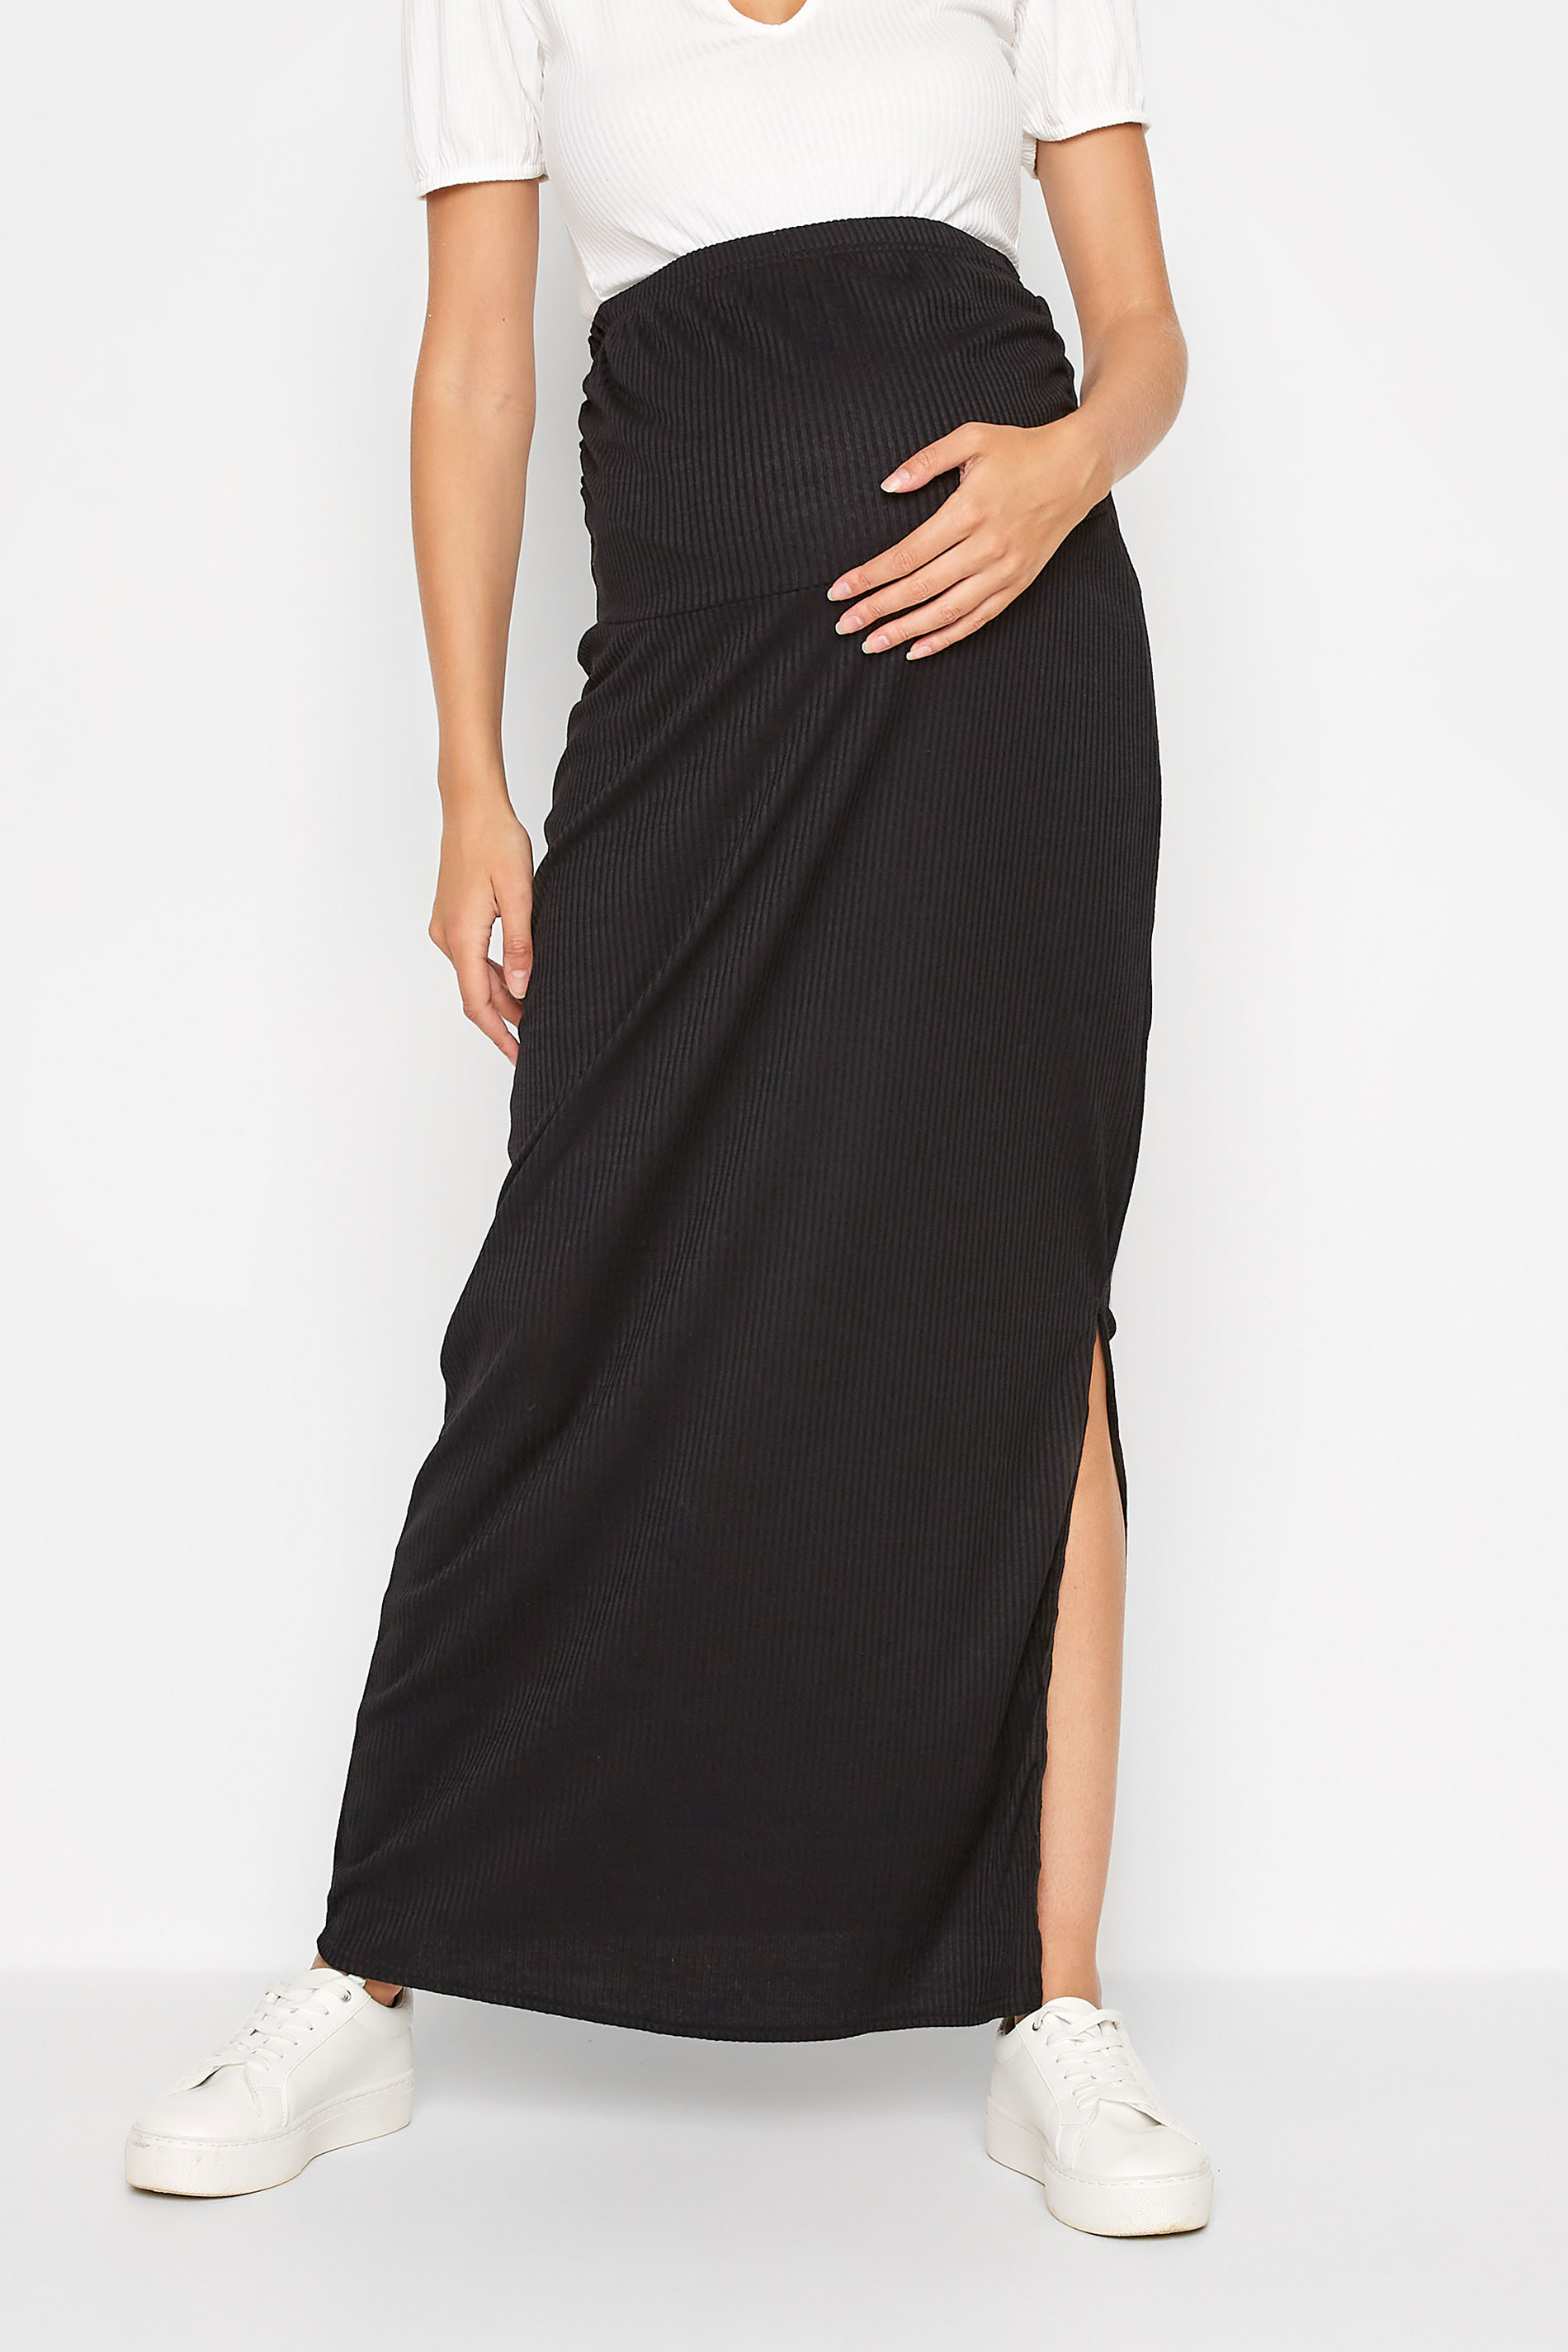 LTS Maternity Black Ribbed Maxi Skirt | Long Tall Sally 1